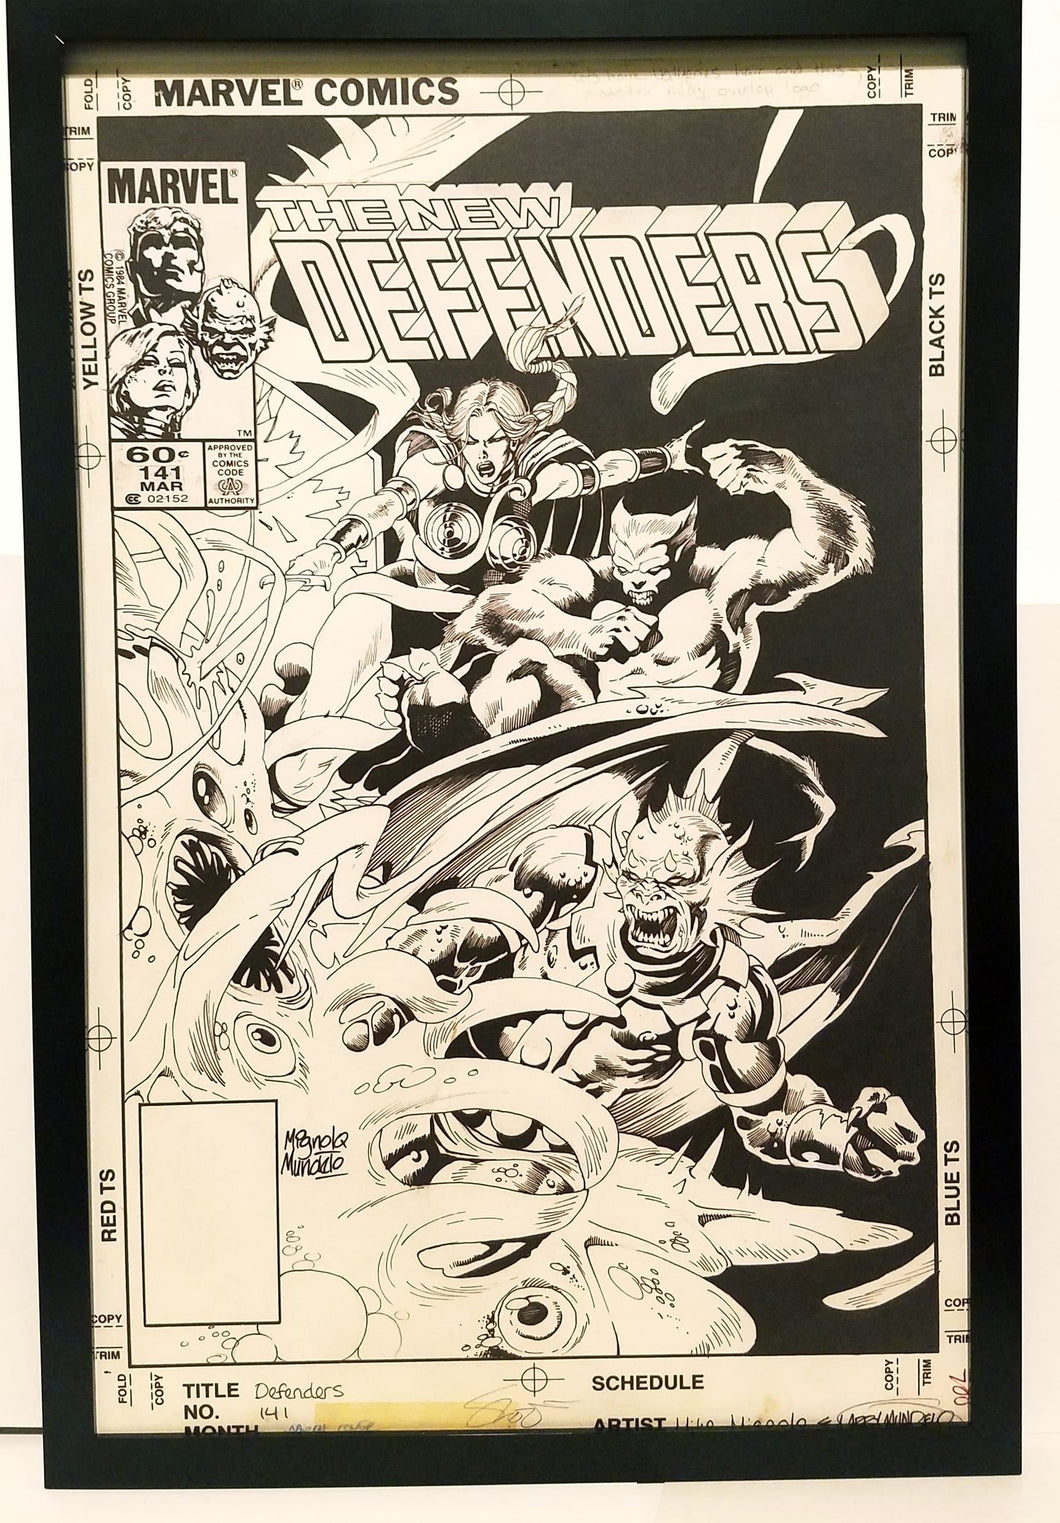 Defenders #141 by Mike Mignola 11x17 FRAMED Original Art Poster Marvel Comics